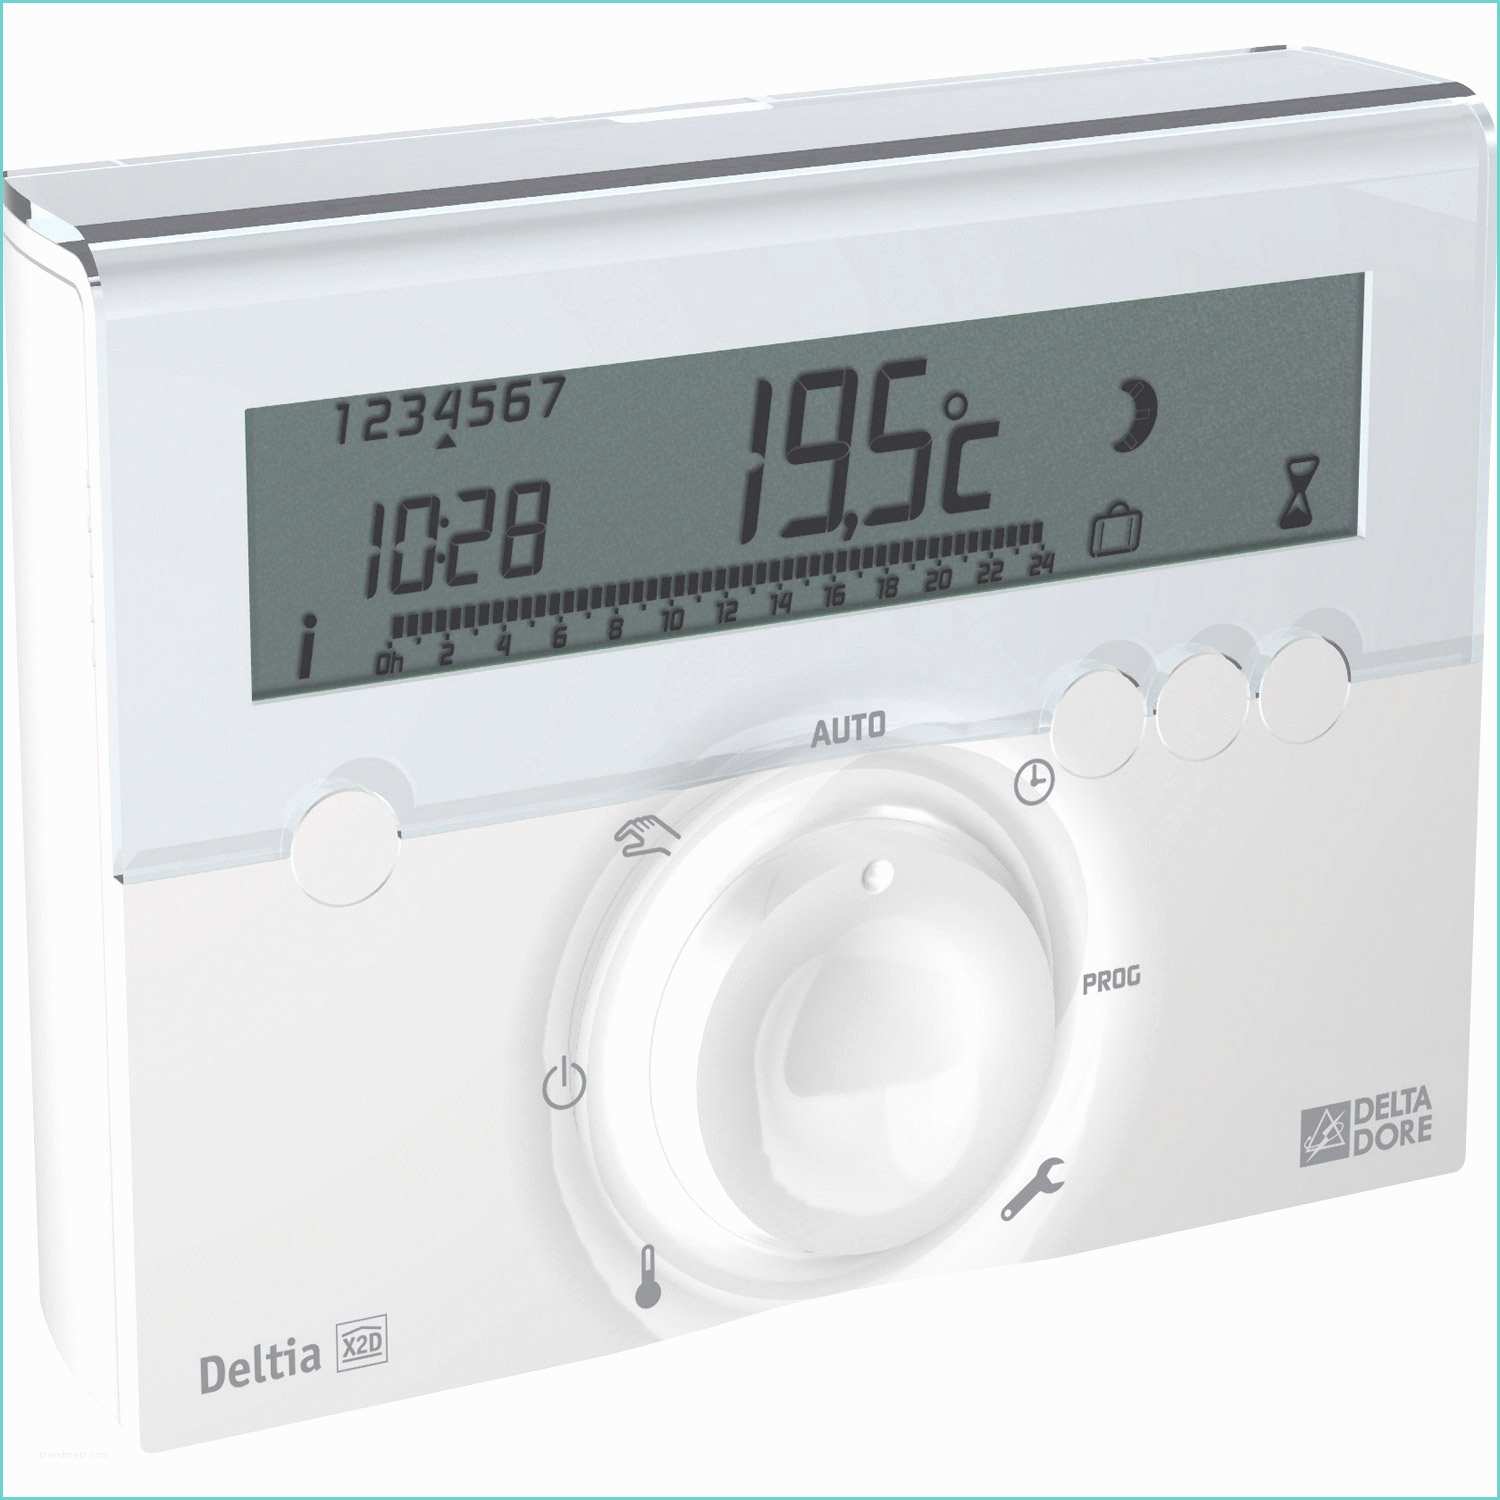 Thermostat Delta Dore Leroy Merlin thermostat Programmable Sans Fil Delta Dore Deltia 8 03